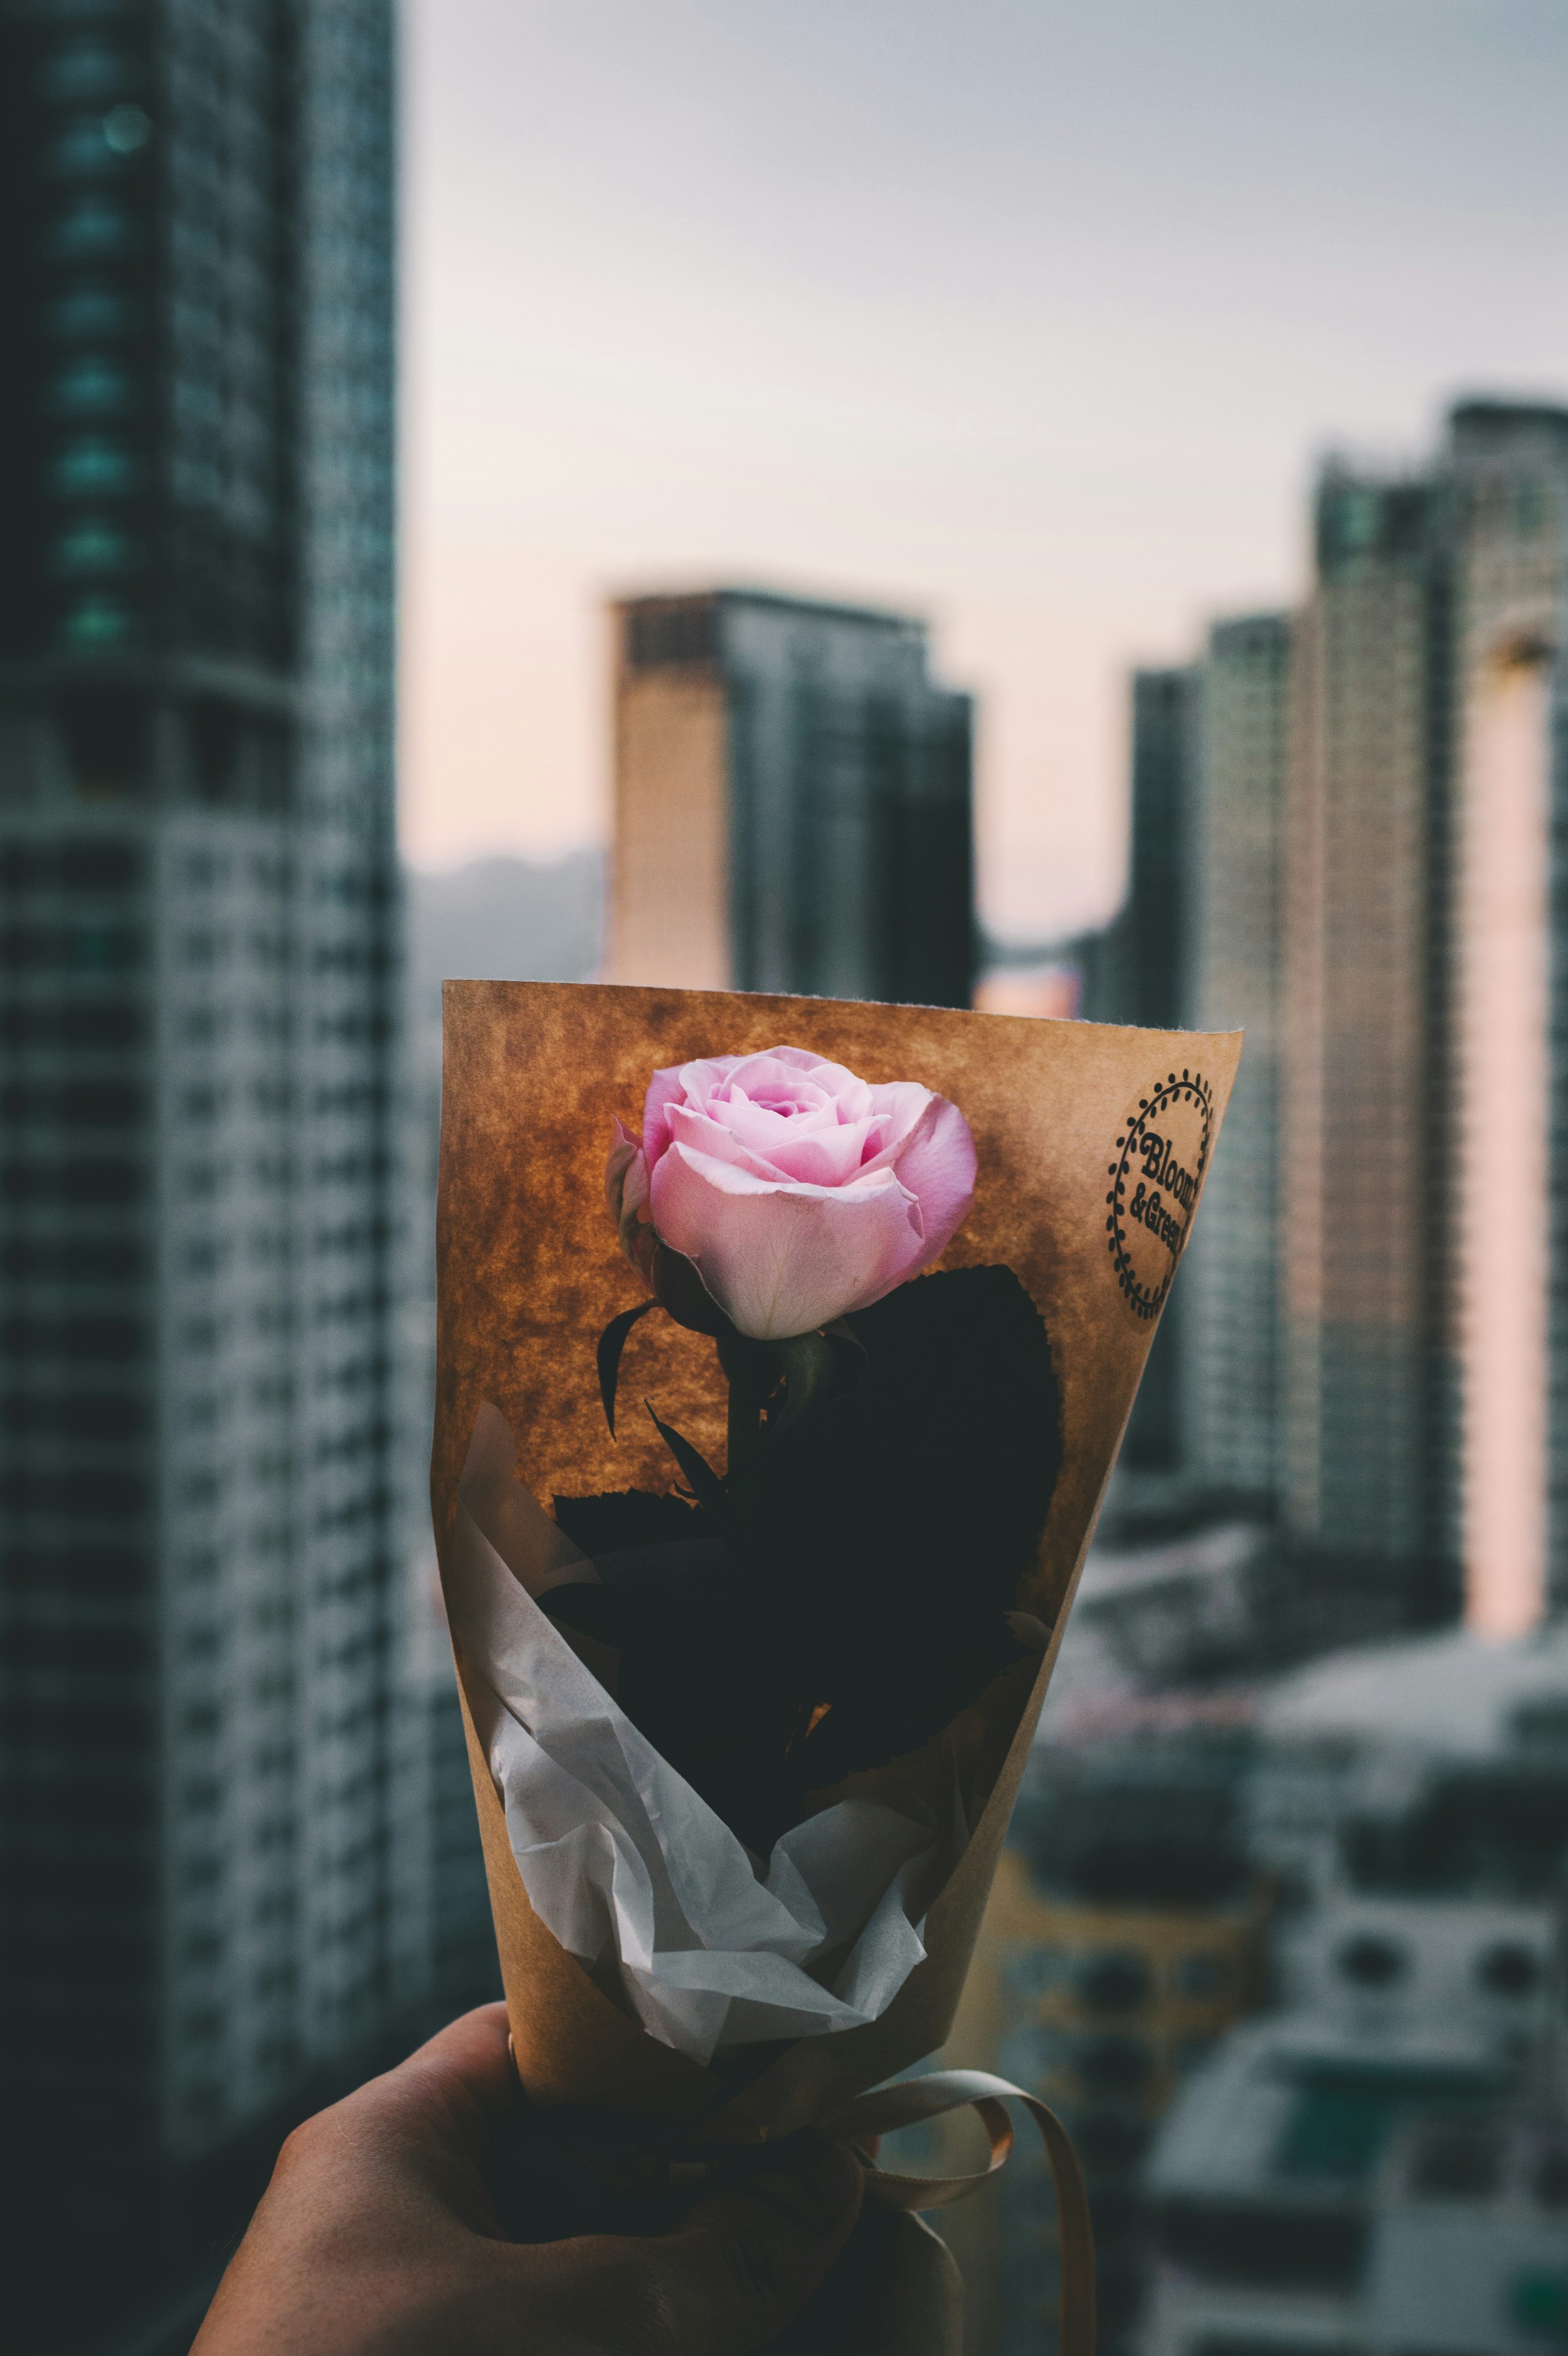 A person holding a pink rose bouquet | Source: Unsplash